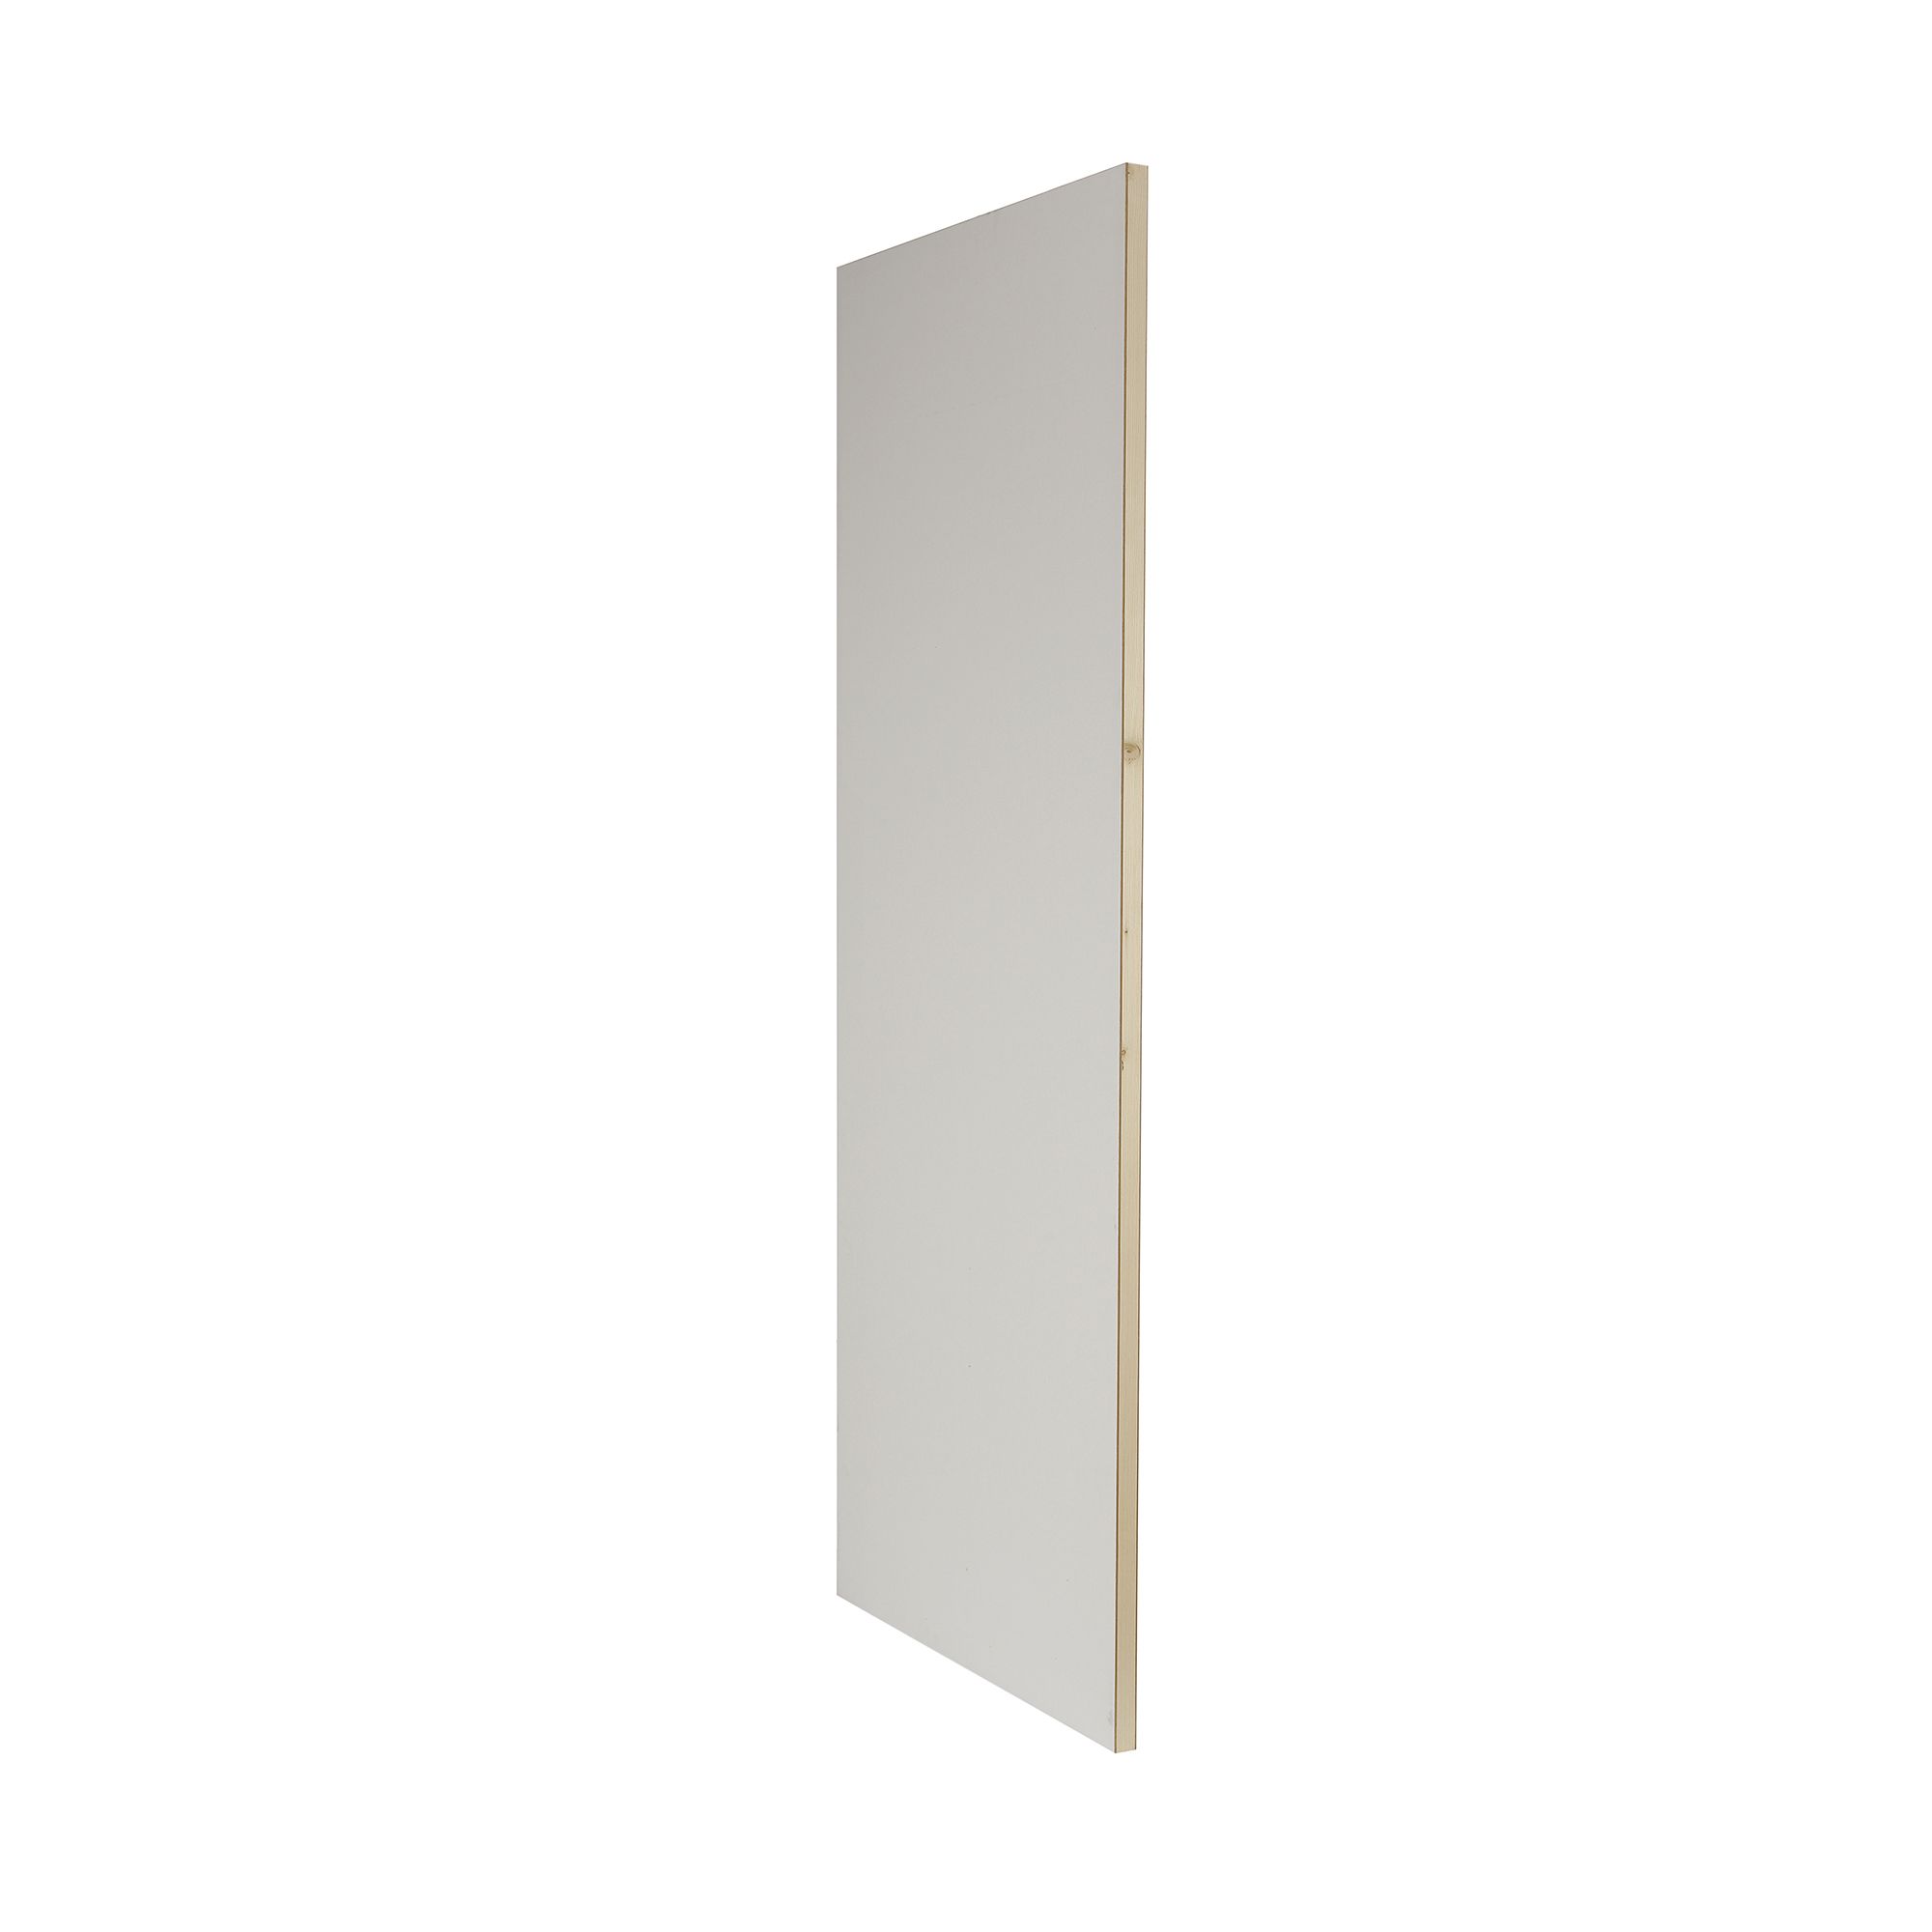 Jeld-Wen Flush White Internal Fire door, (H)1981mm (W)686mm (T)44mm